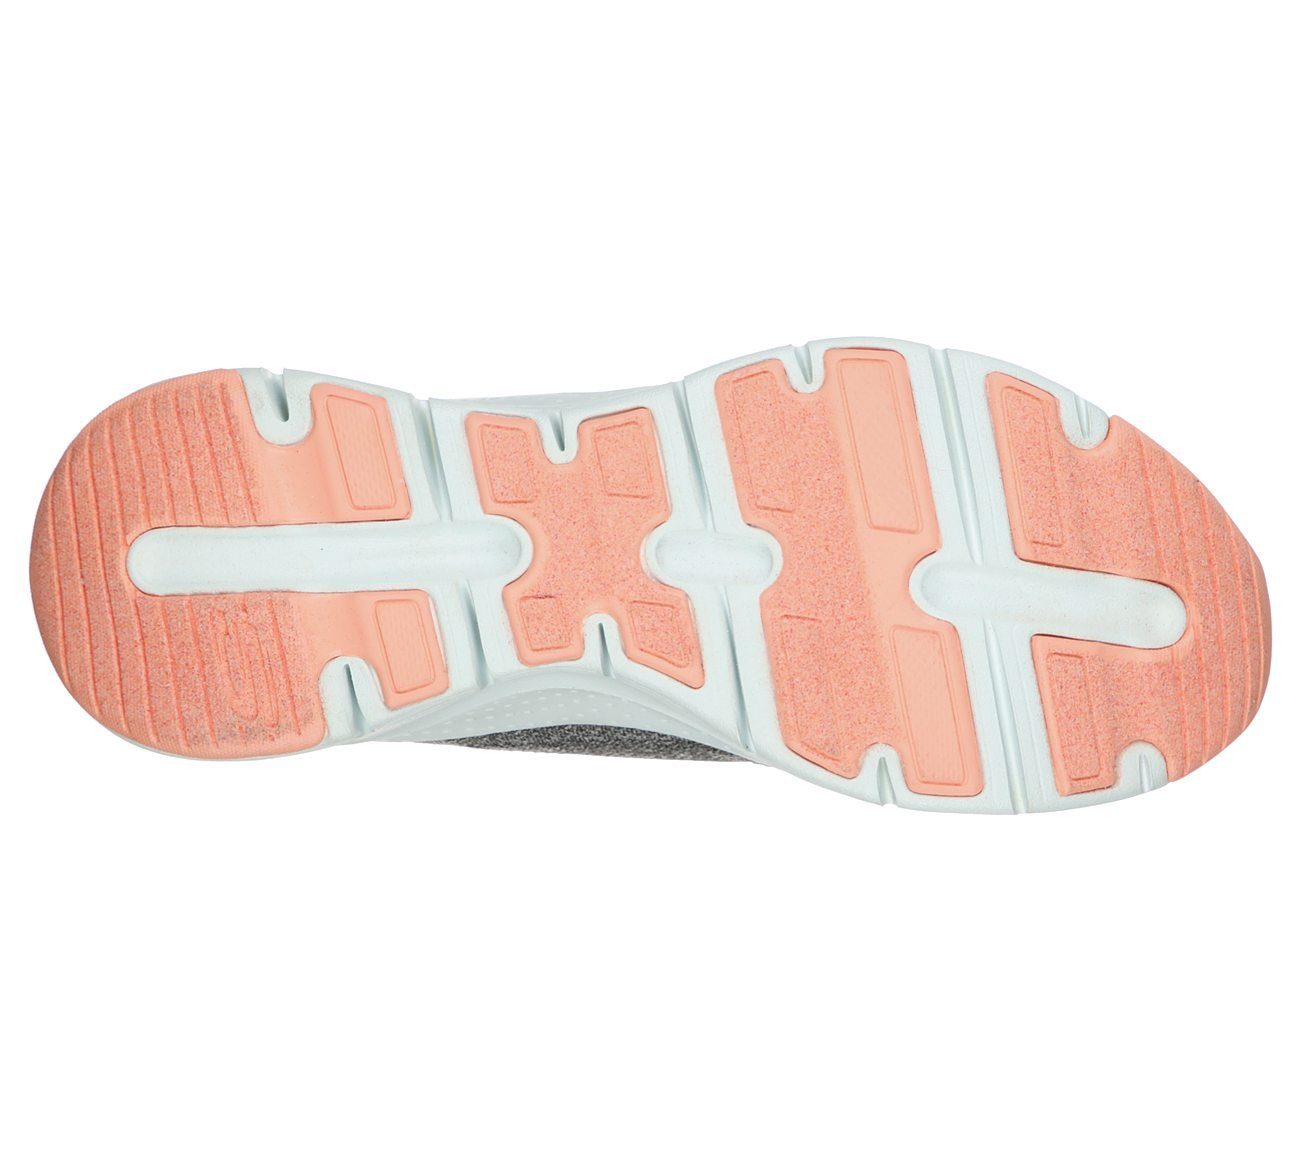 Skechers Comfy Wave Sneaker gray/pink GYPK